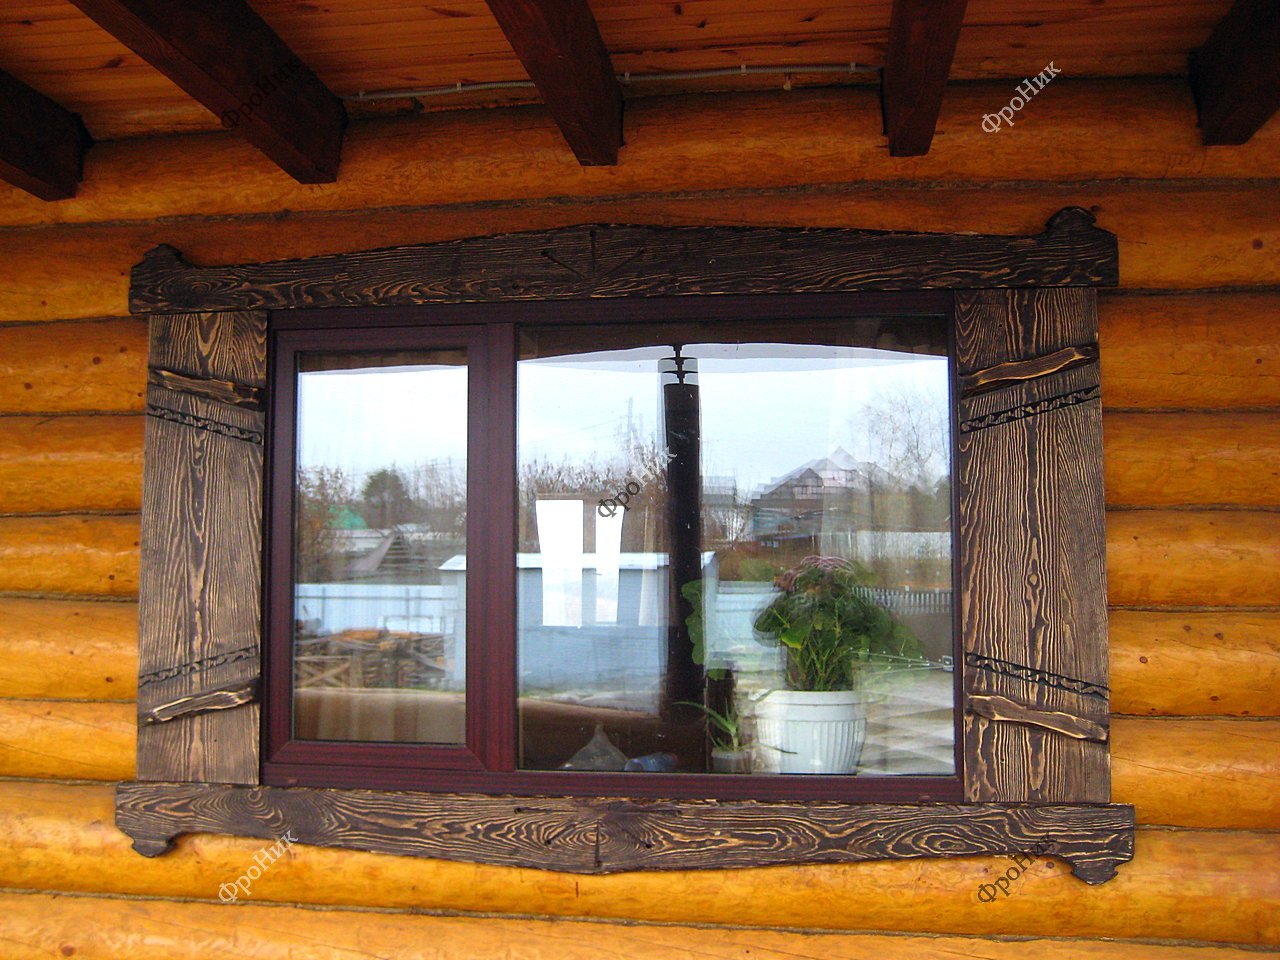 Отделка окон дверей. Обналичка на окна в деревянном доме. Наличники на окна деревянные. Деревянная обналичка на окна. Наличники на окна в деревянном доме.